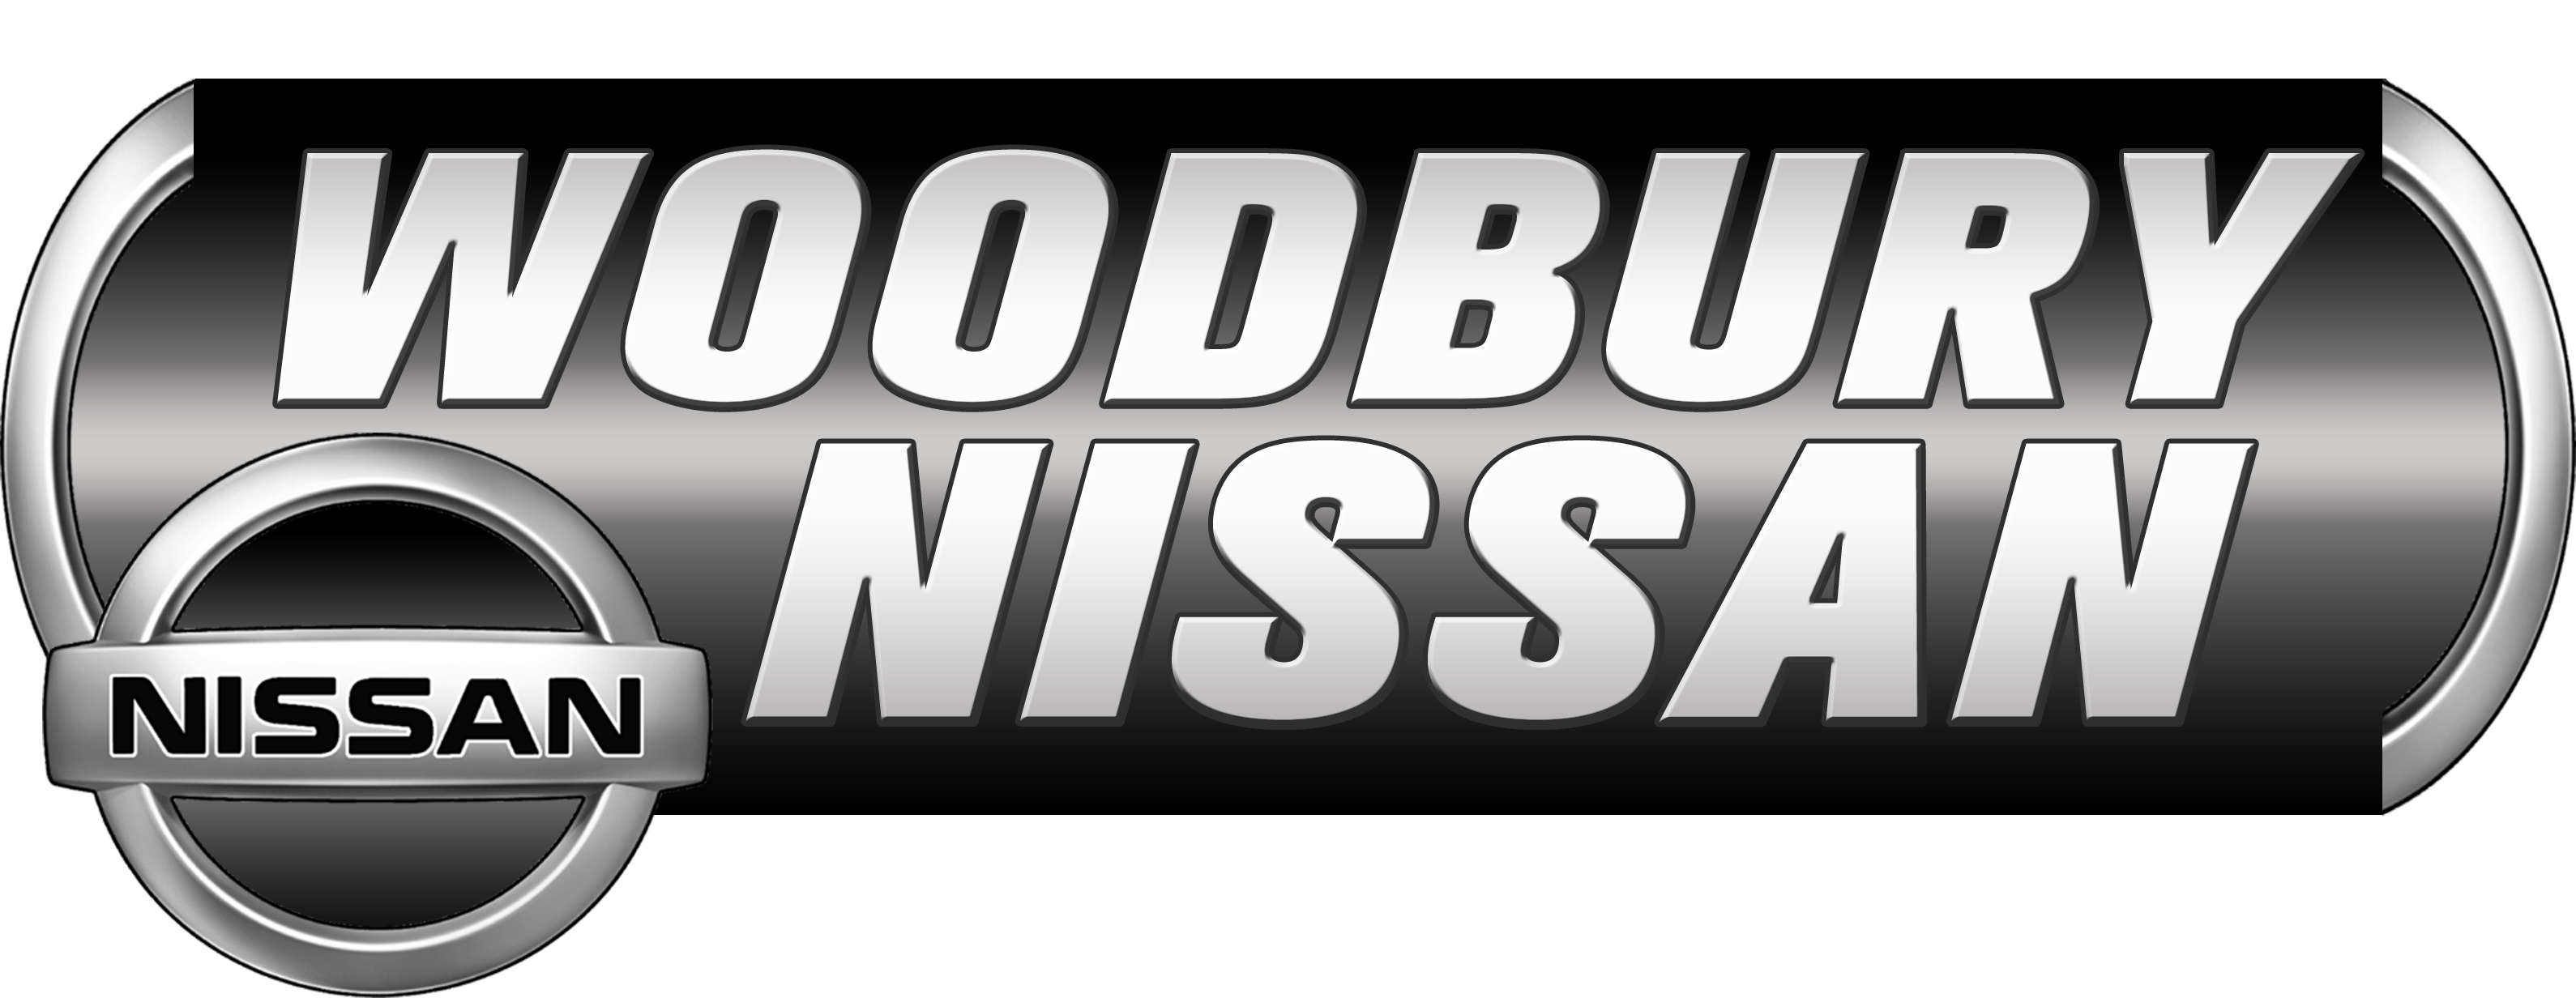 Nissan dealer woodbury nj #9